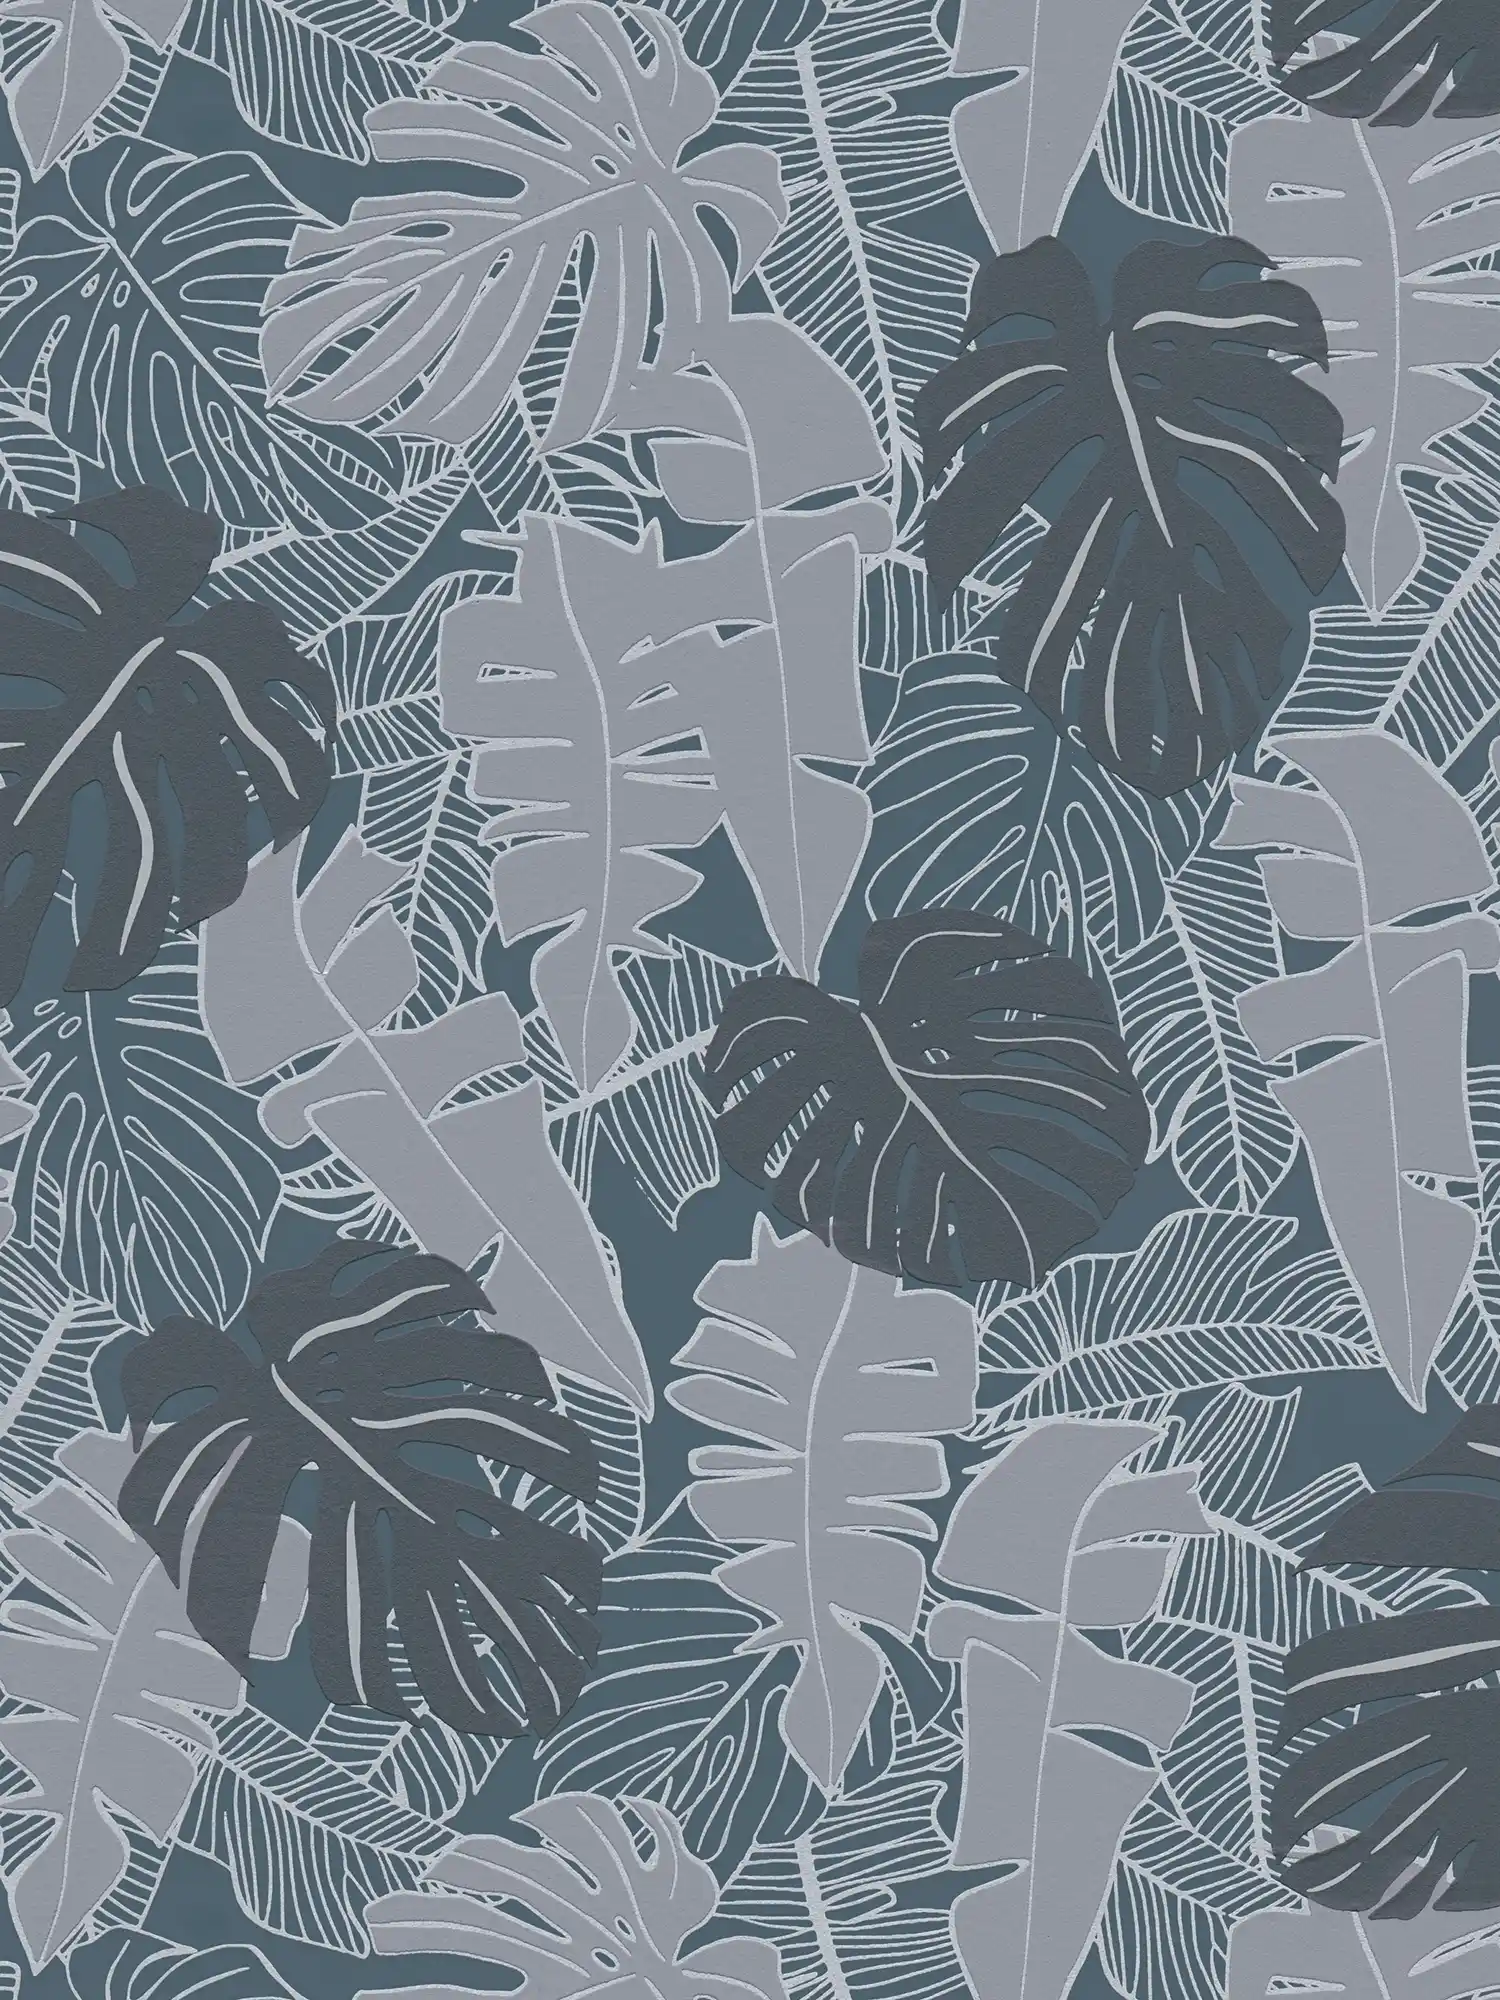 Jungle pattern wallpaper with banana leaves & metallic effect - black, grey
